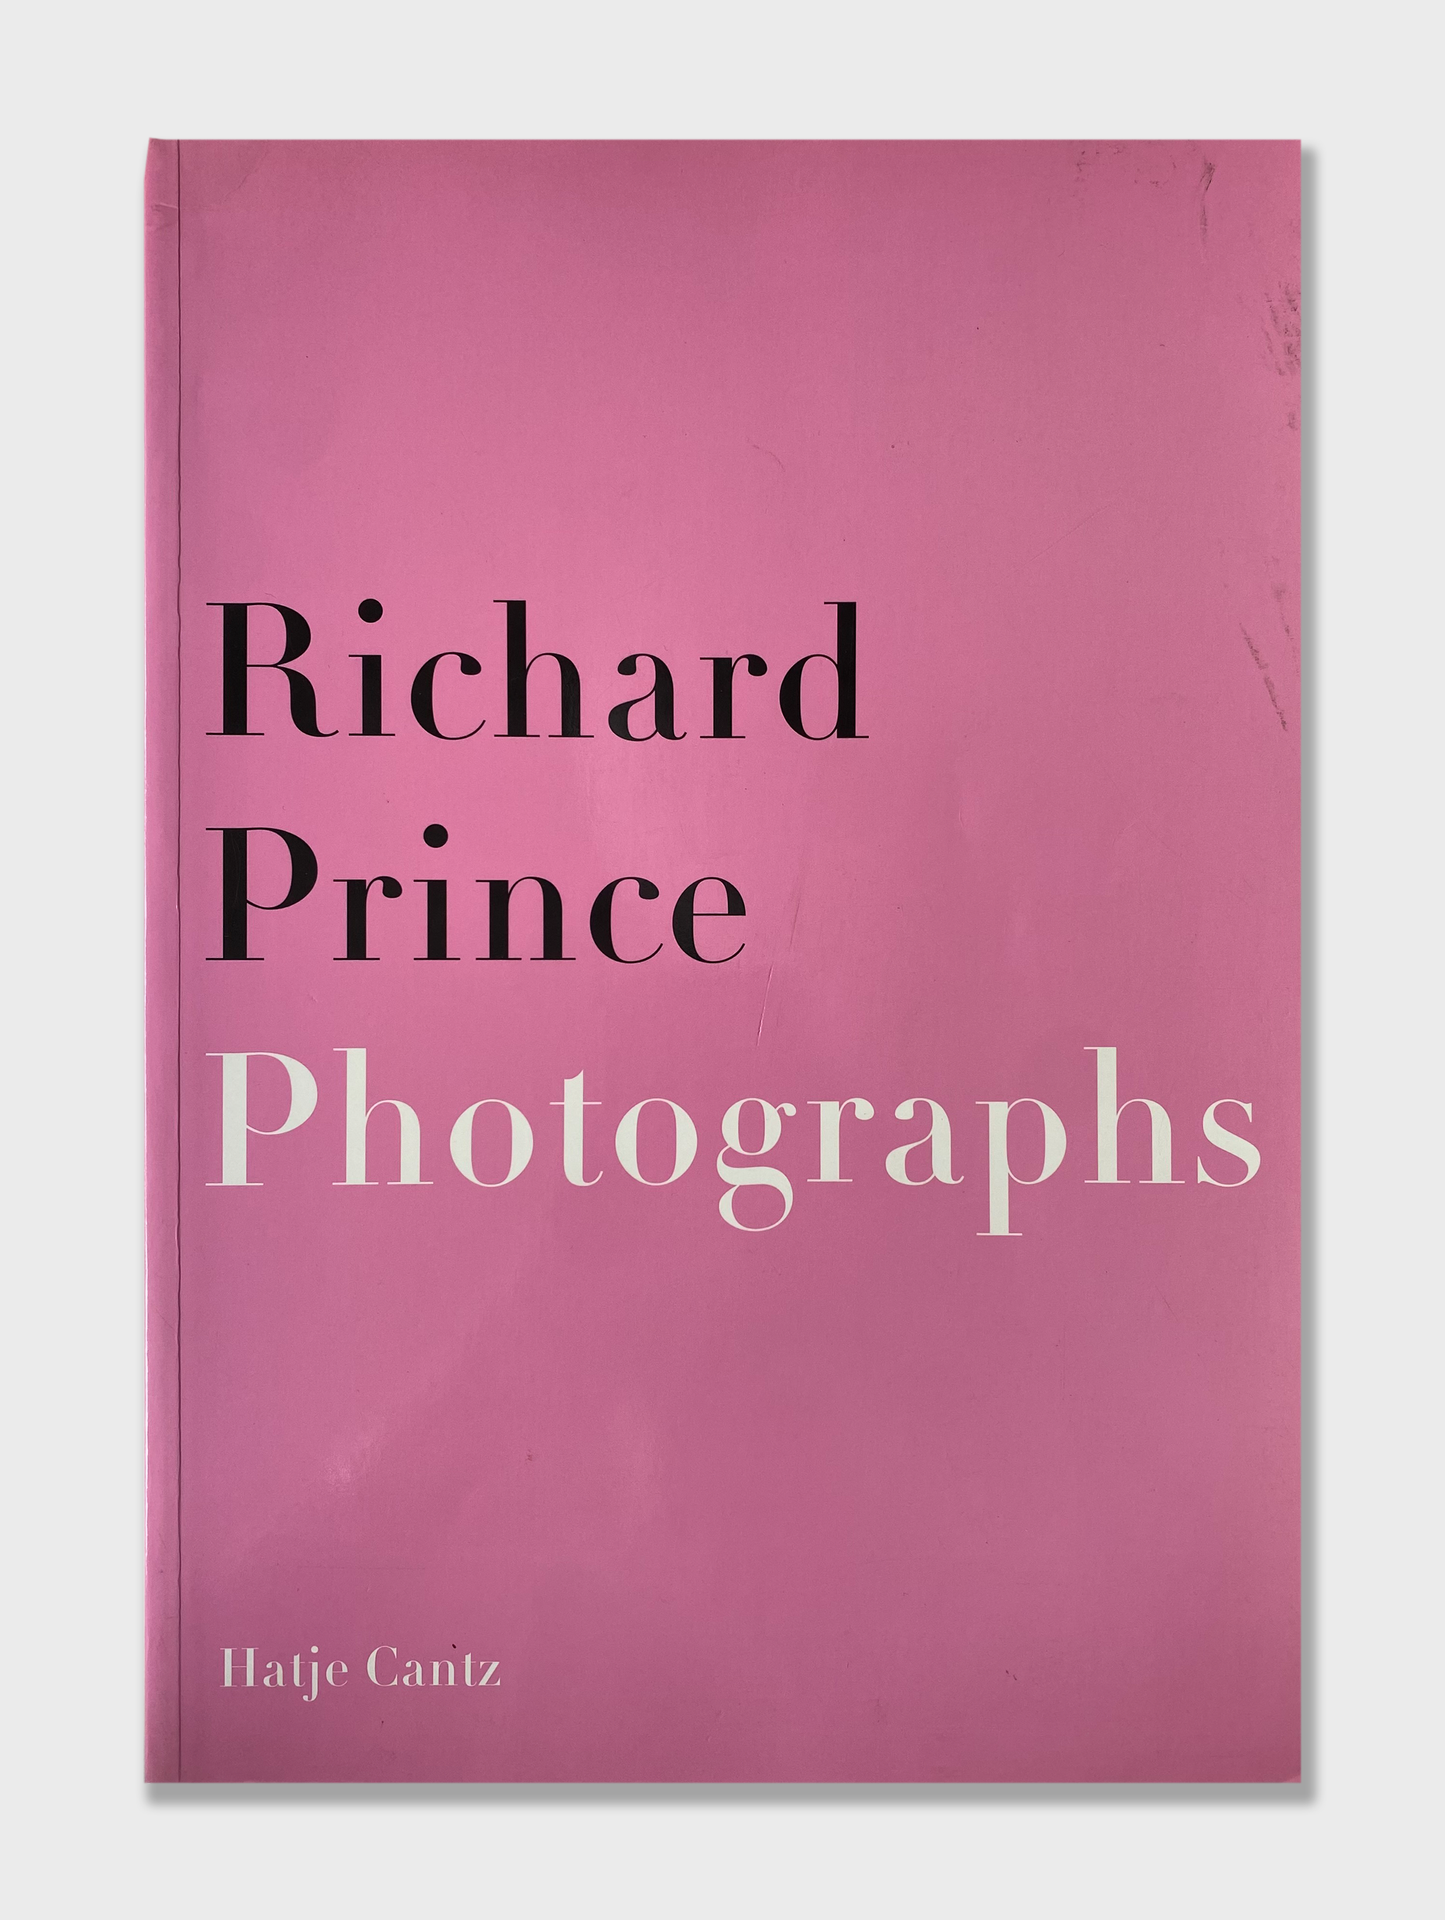 Richard Prince - Paintings / Photographs (2002)